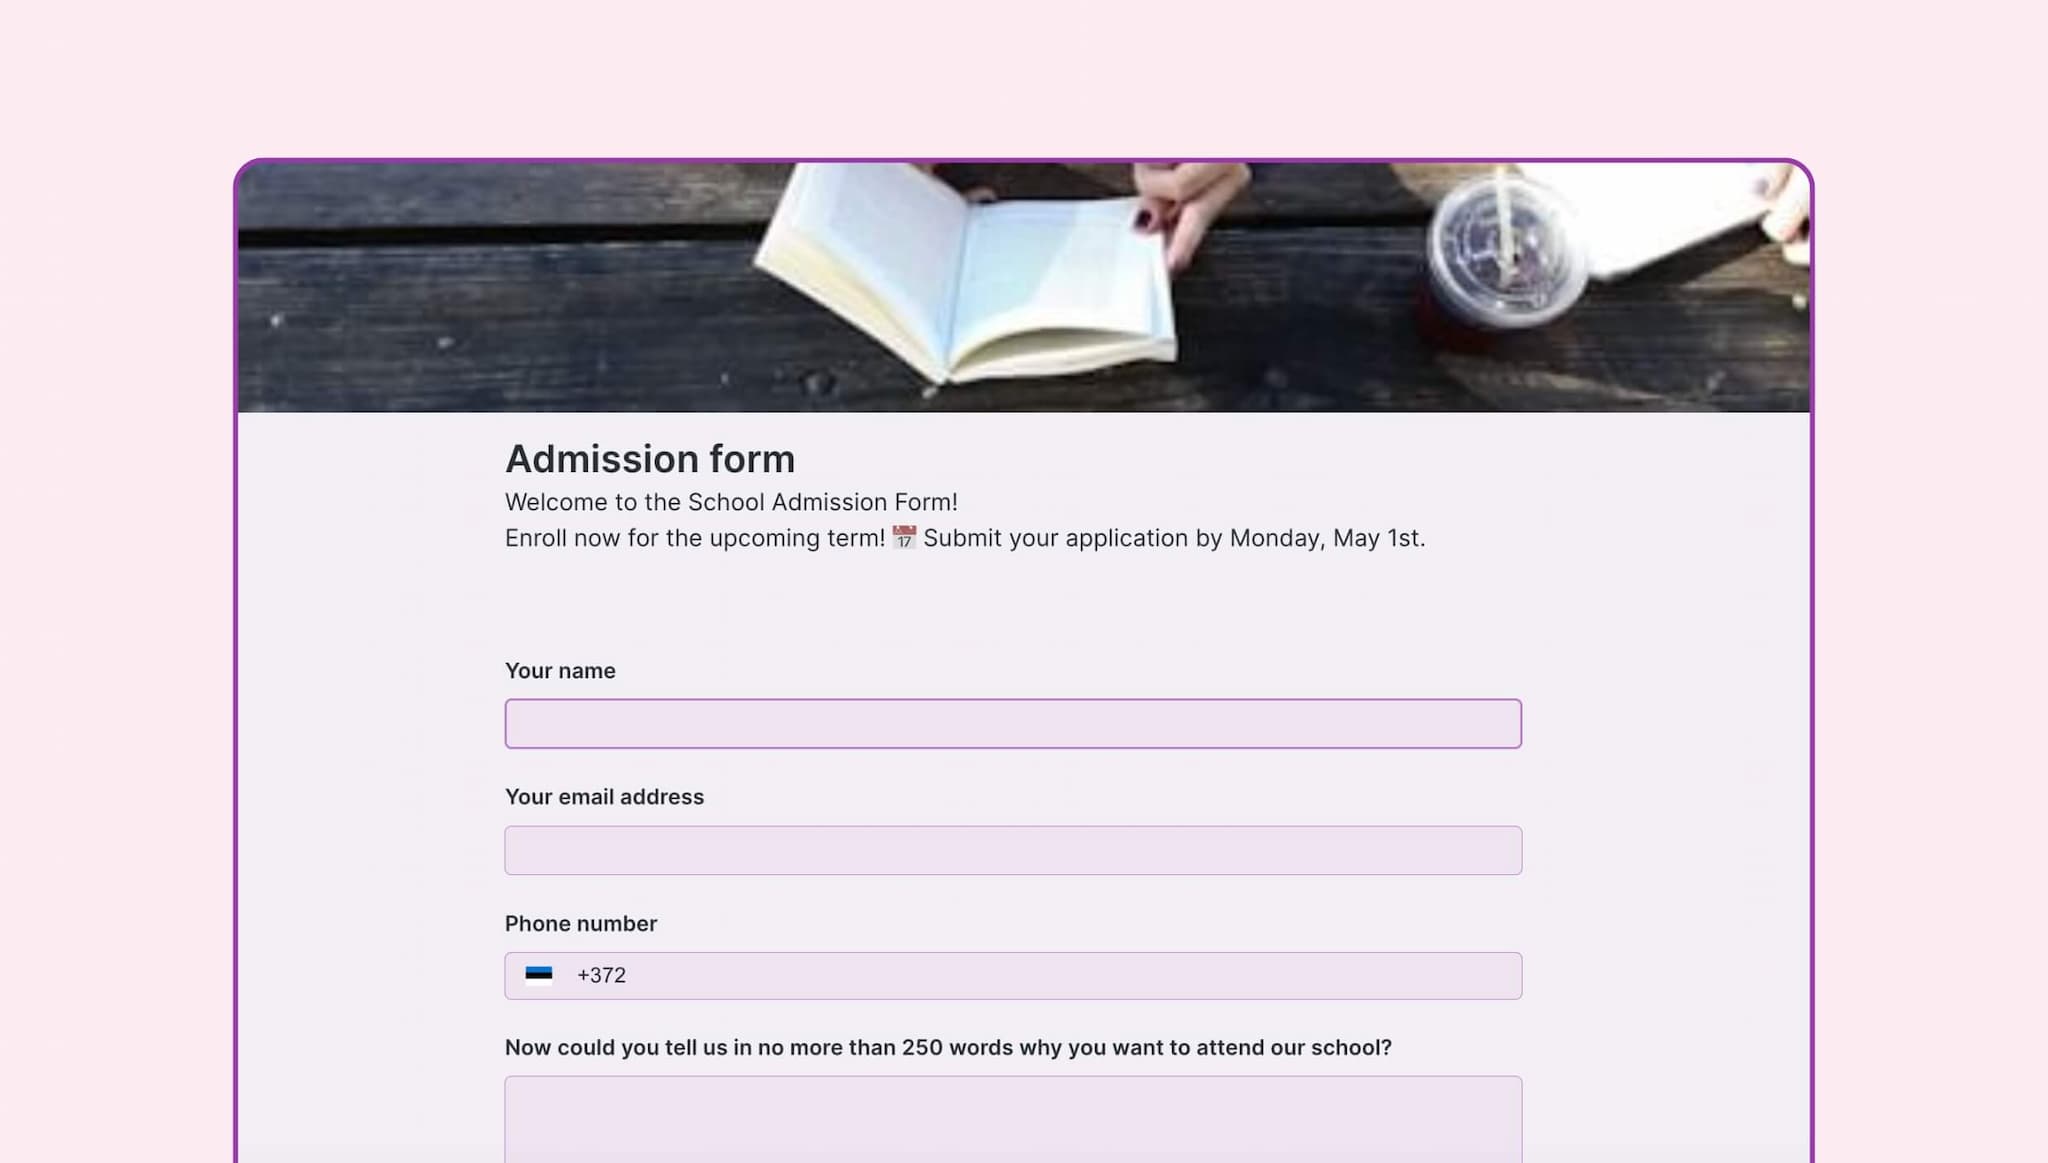 School admission form